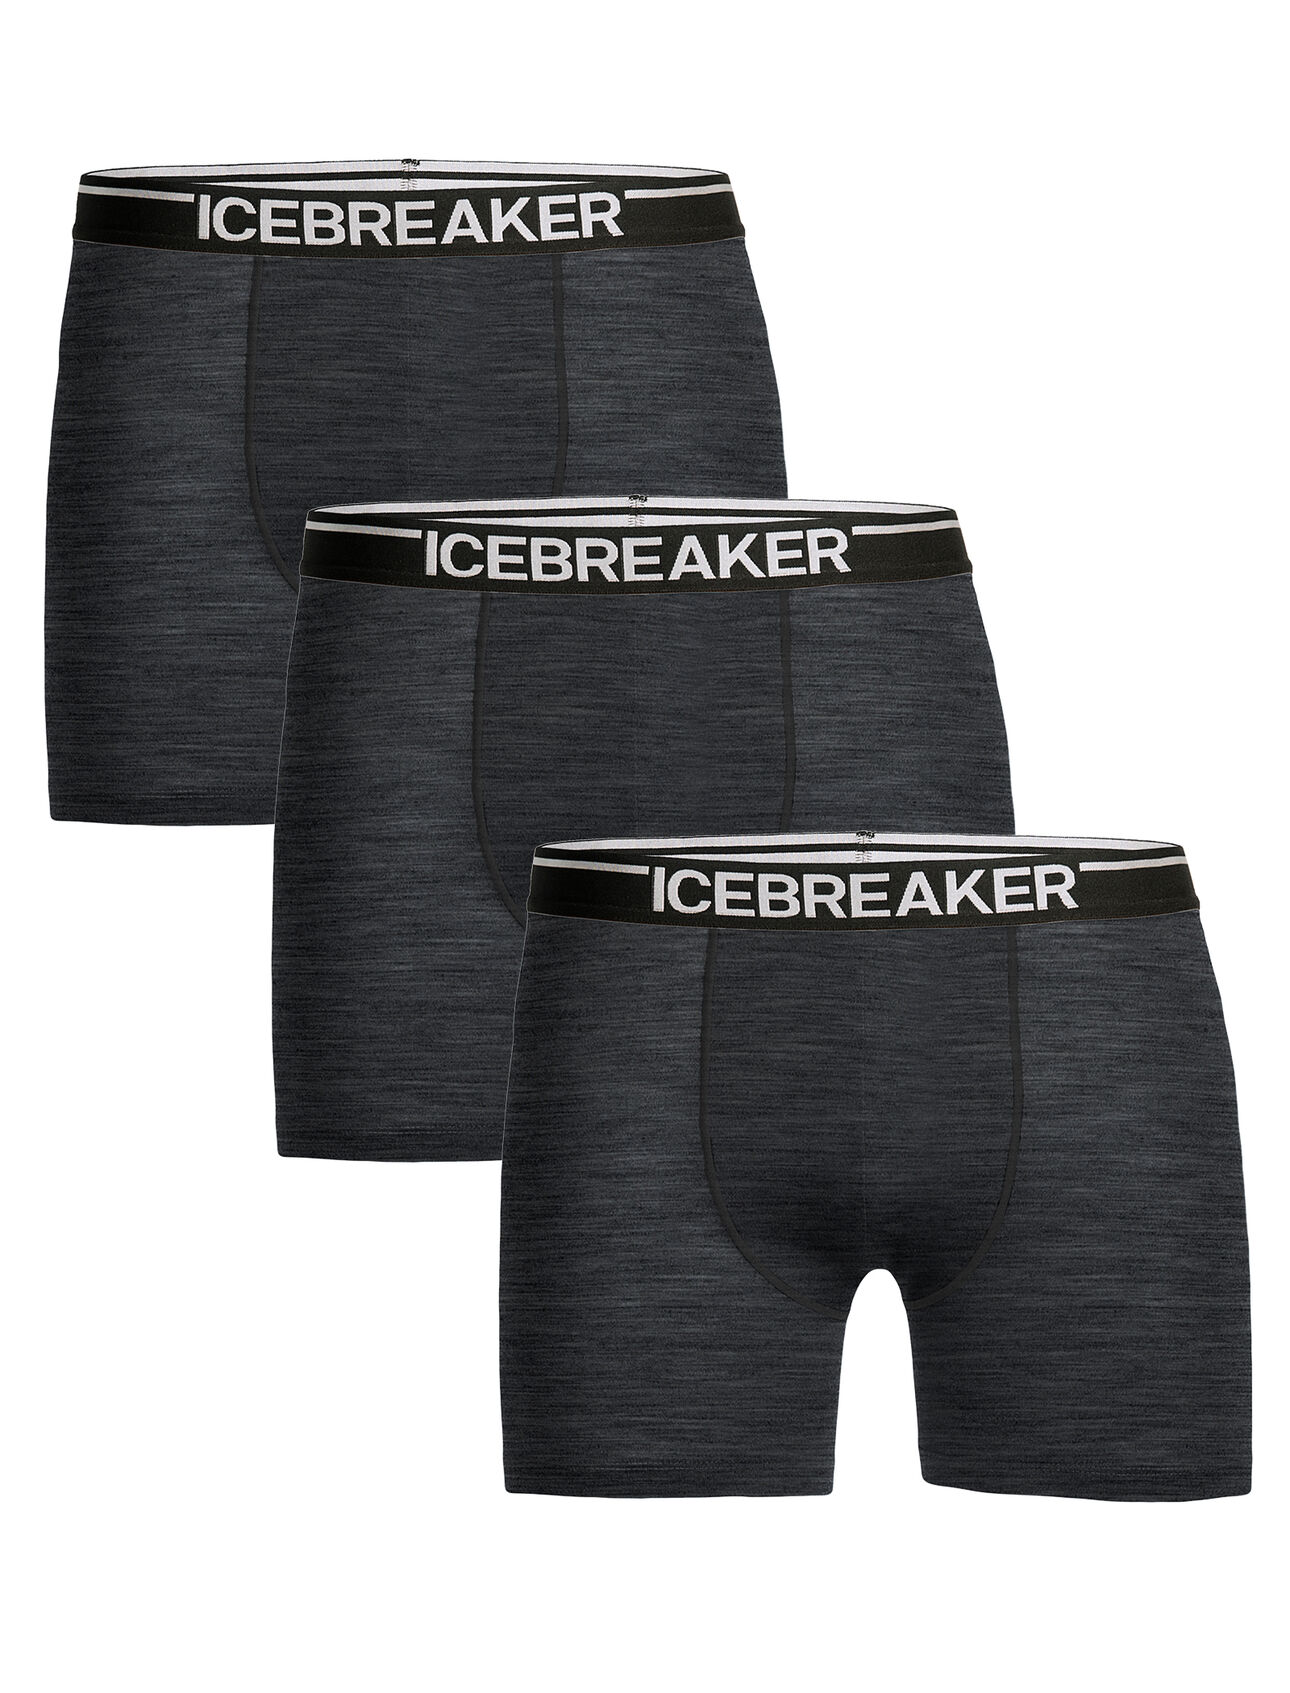 Large Icebreaker Mens Anatomica Merino Underwear-Black